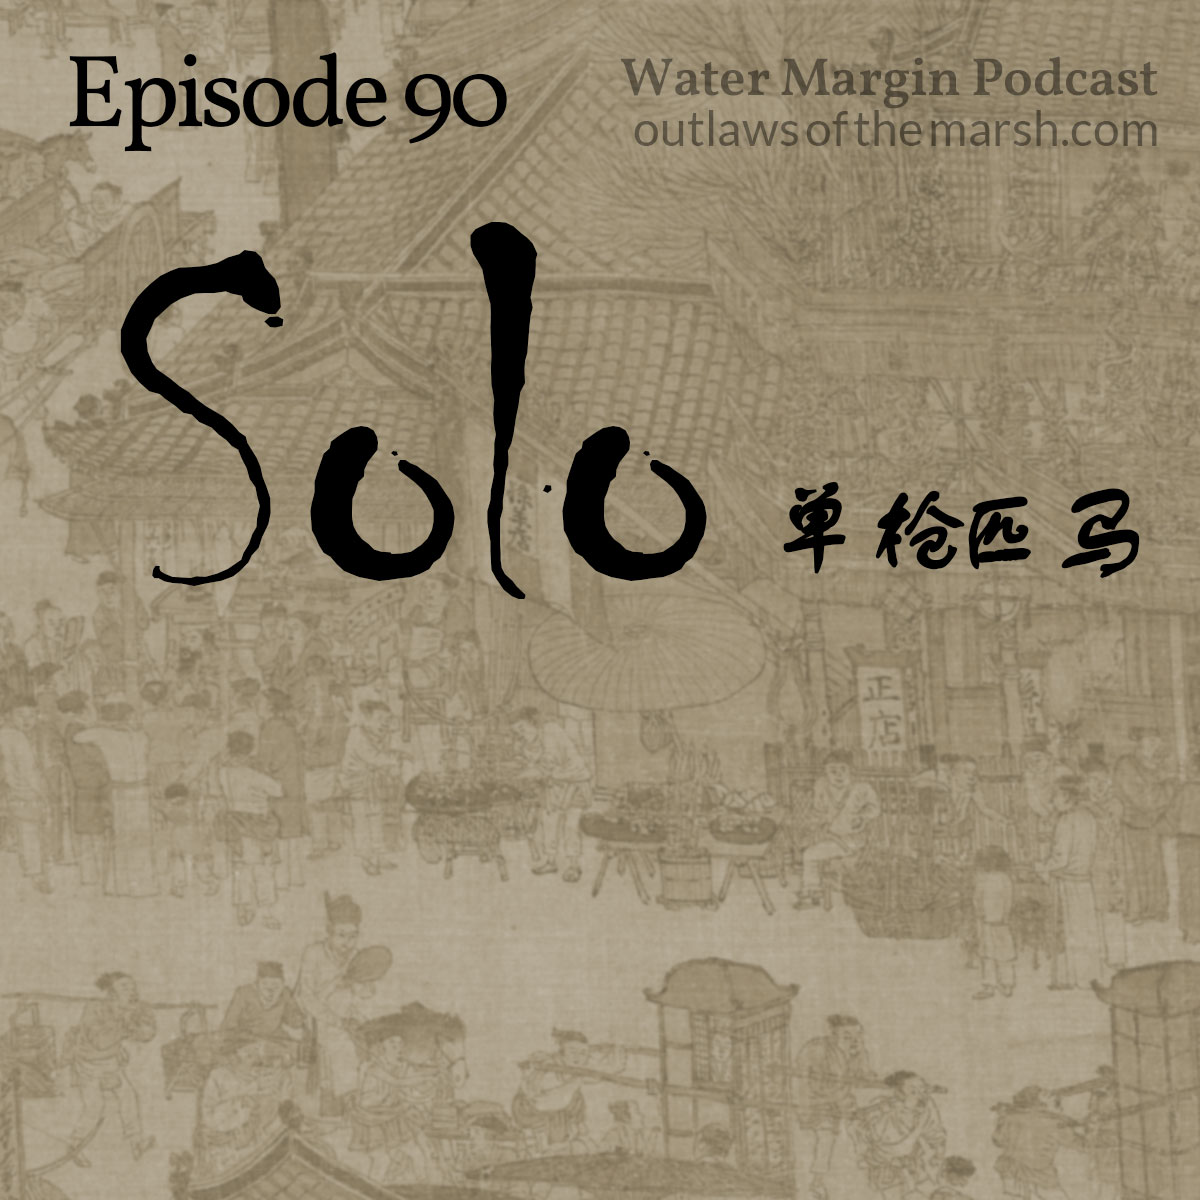 Water Margin Podcast: Episode 090